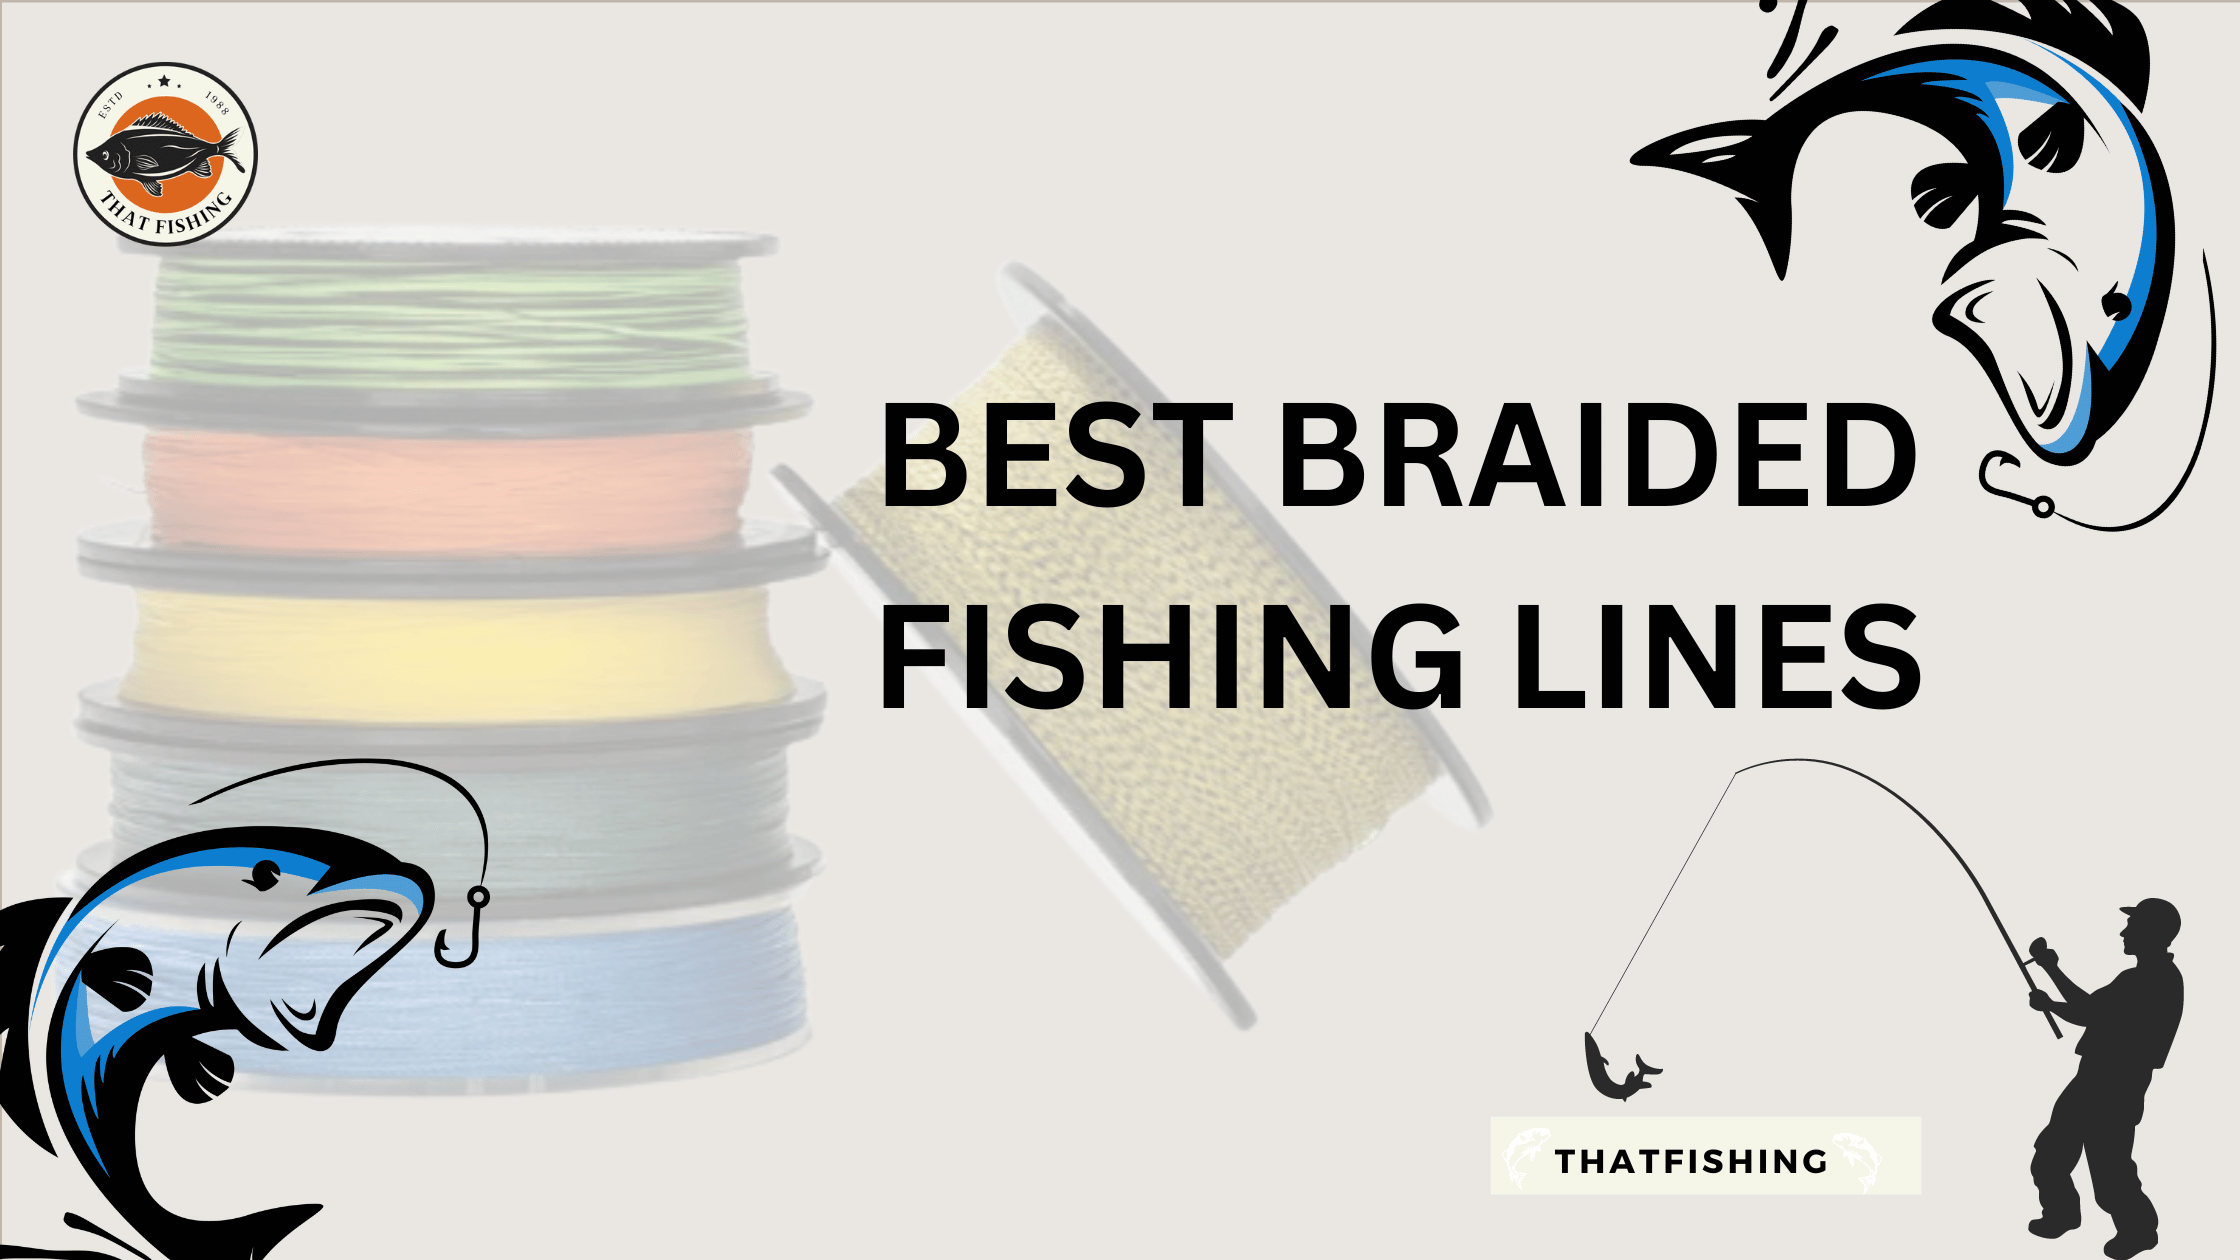 Best Braided Fishing Line